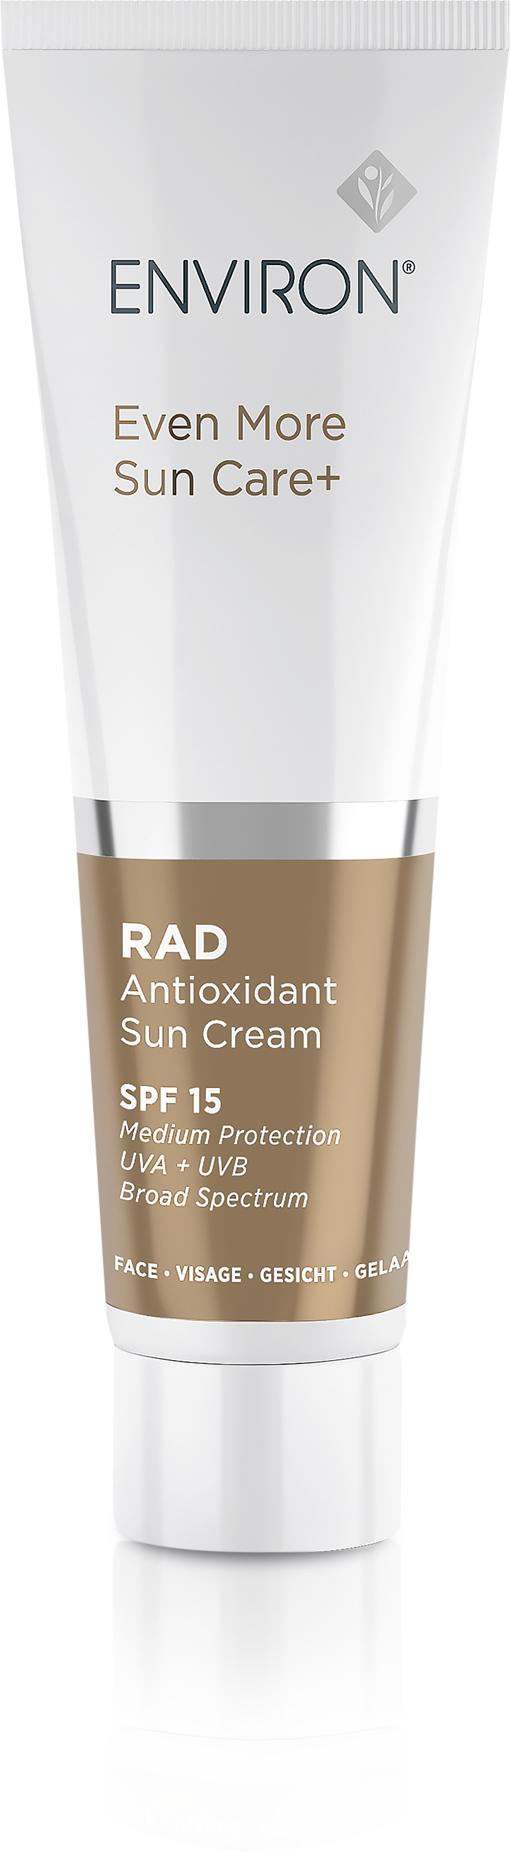 Environ RAD Antioxidant Sun Cream SPF15